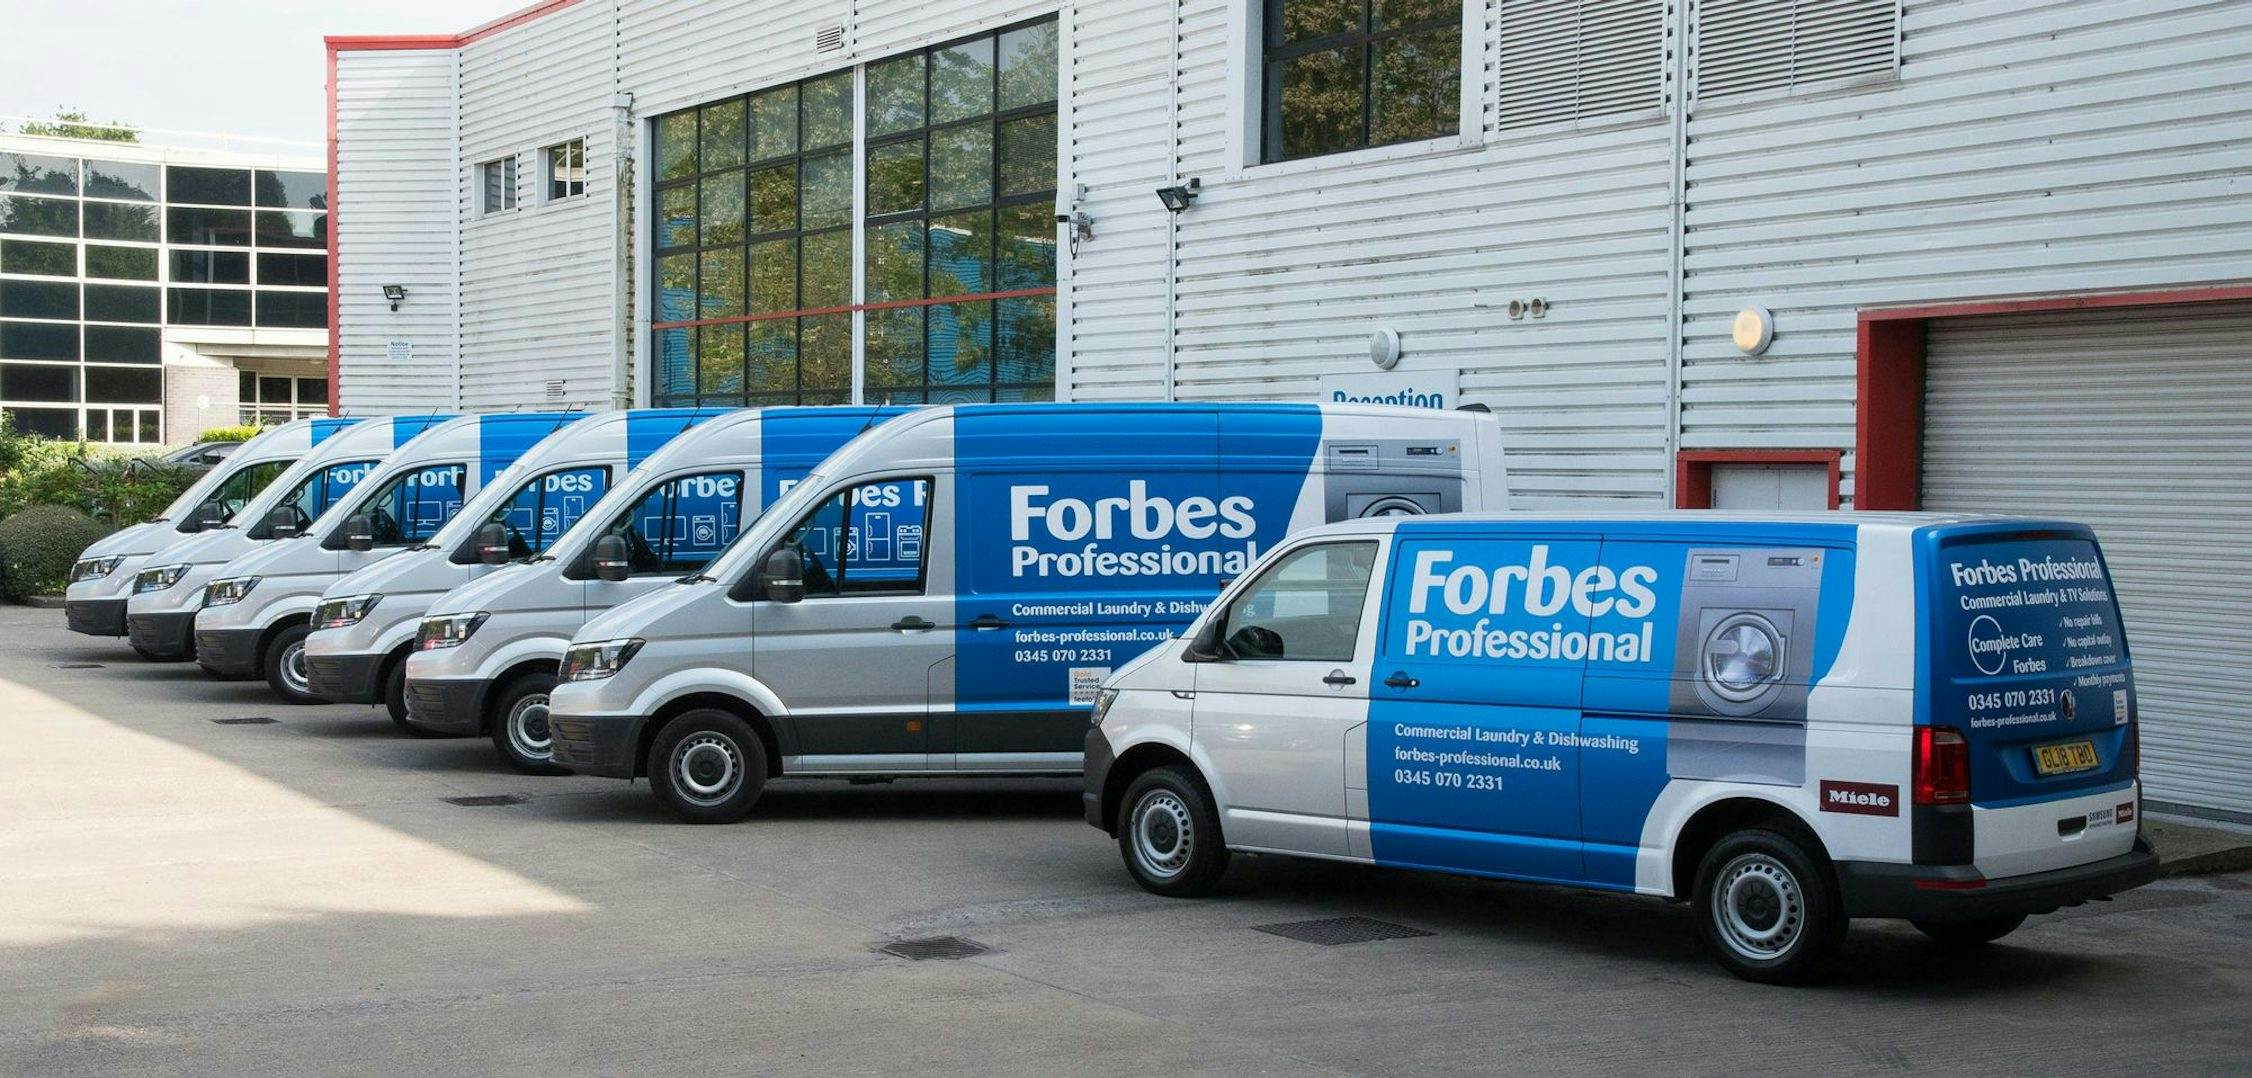 Forbes acquires Claridge Electricals’ rental accounts